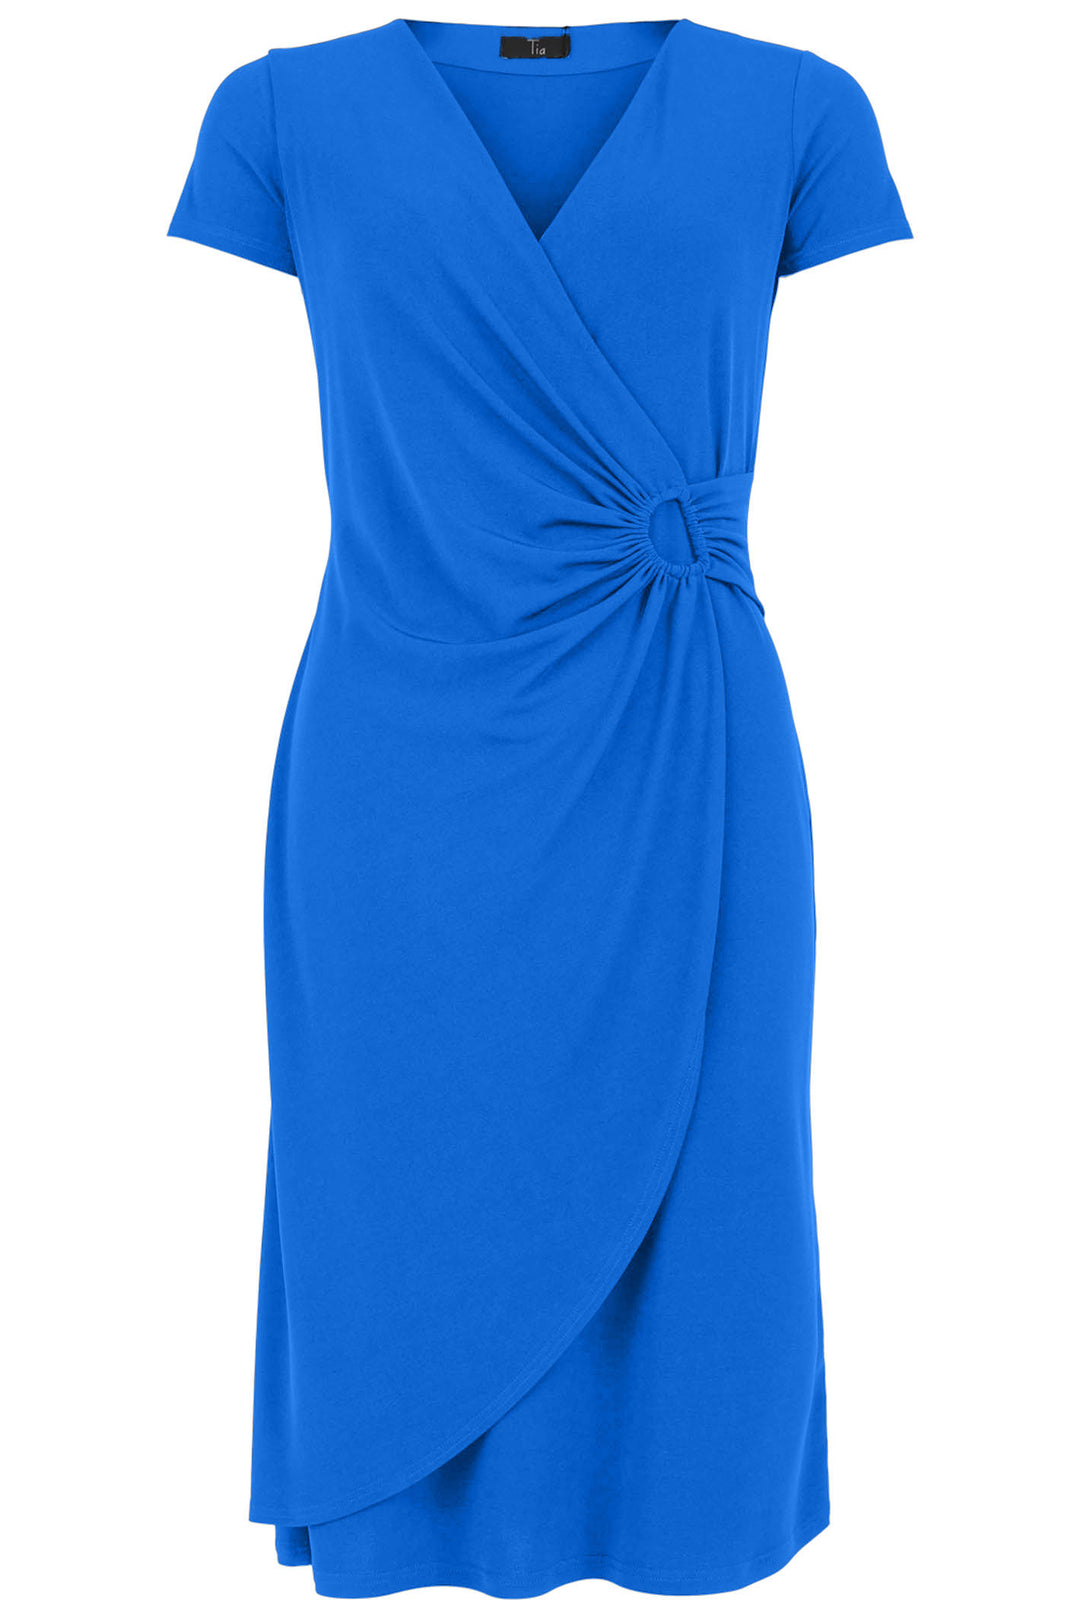 Tia London 78774 6504 Palace Blue Wrap Style Dress - Experience Boutique